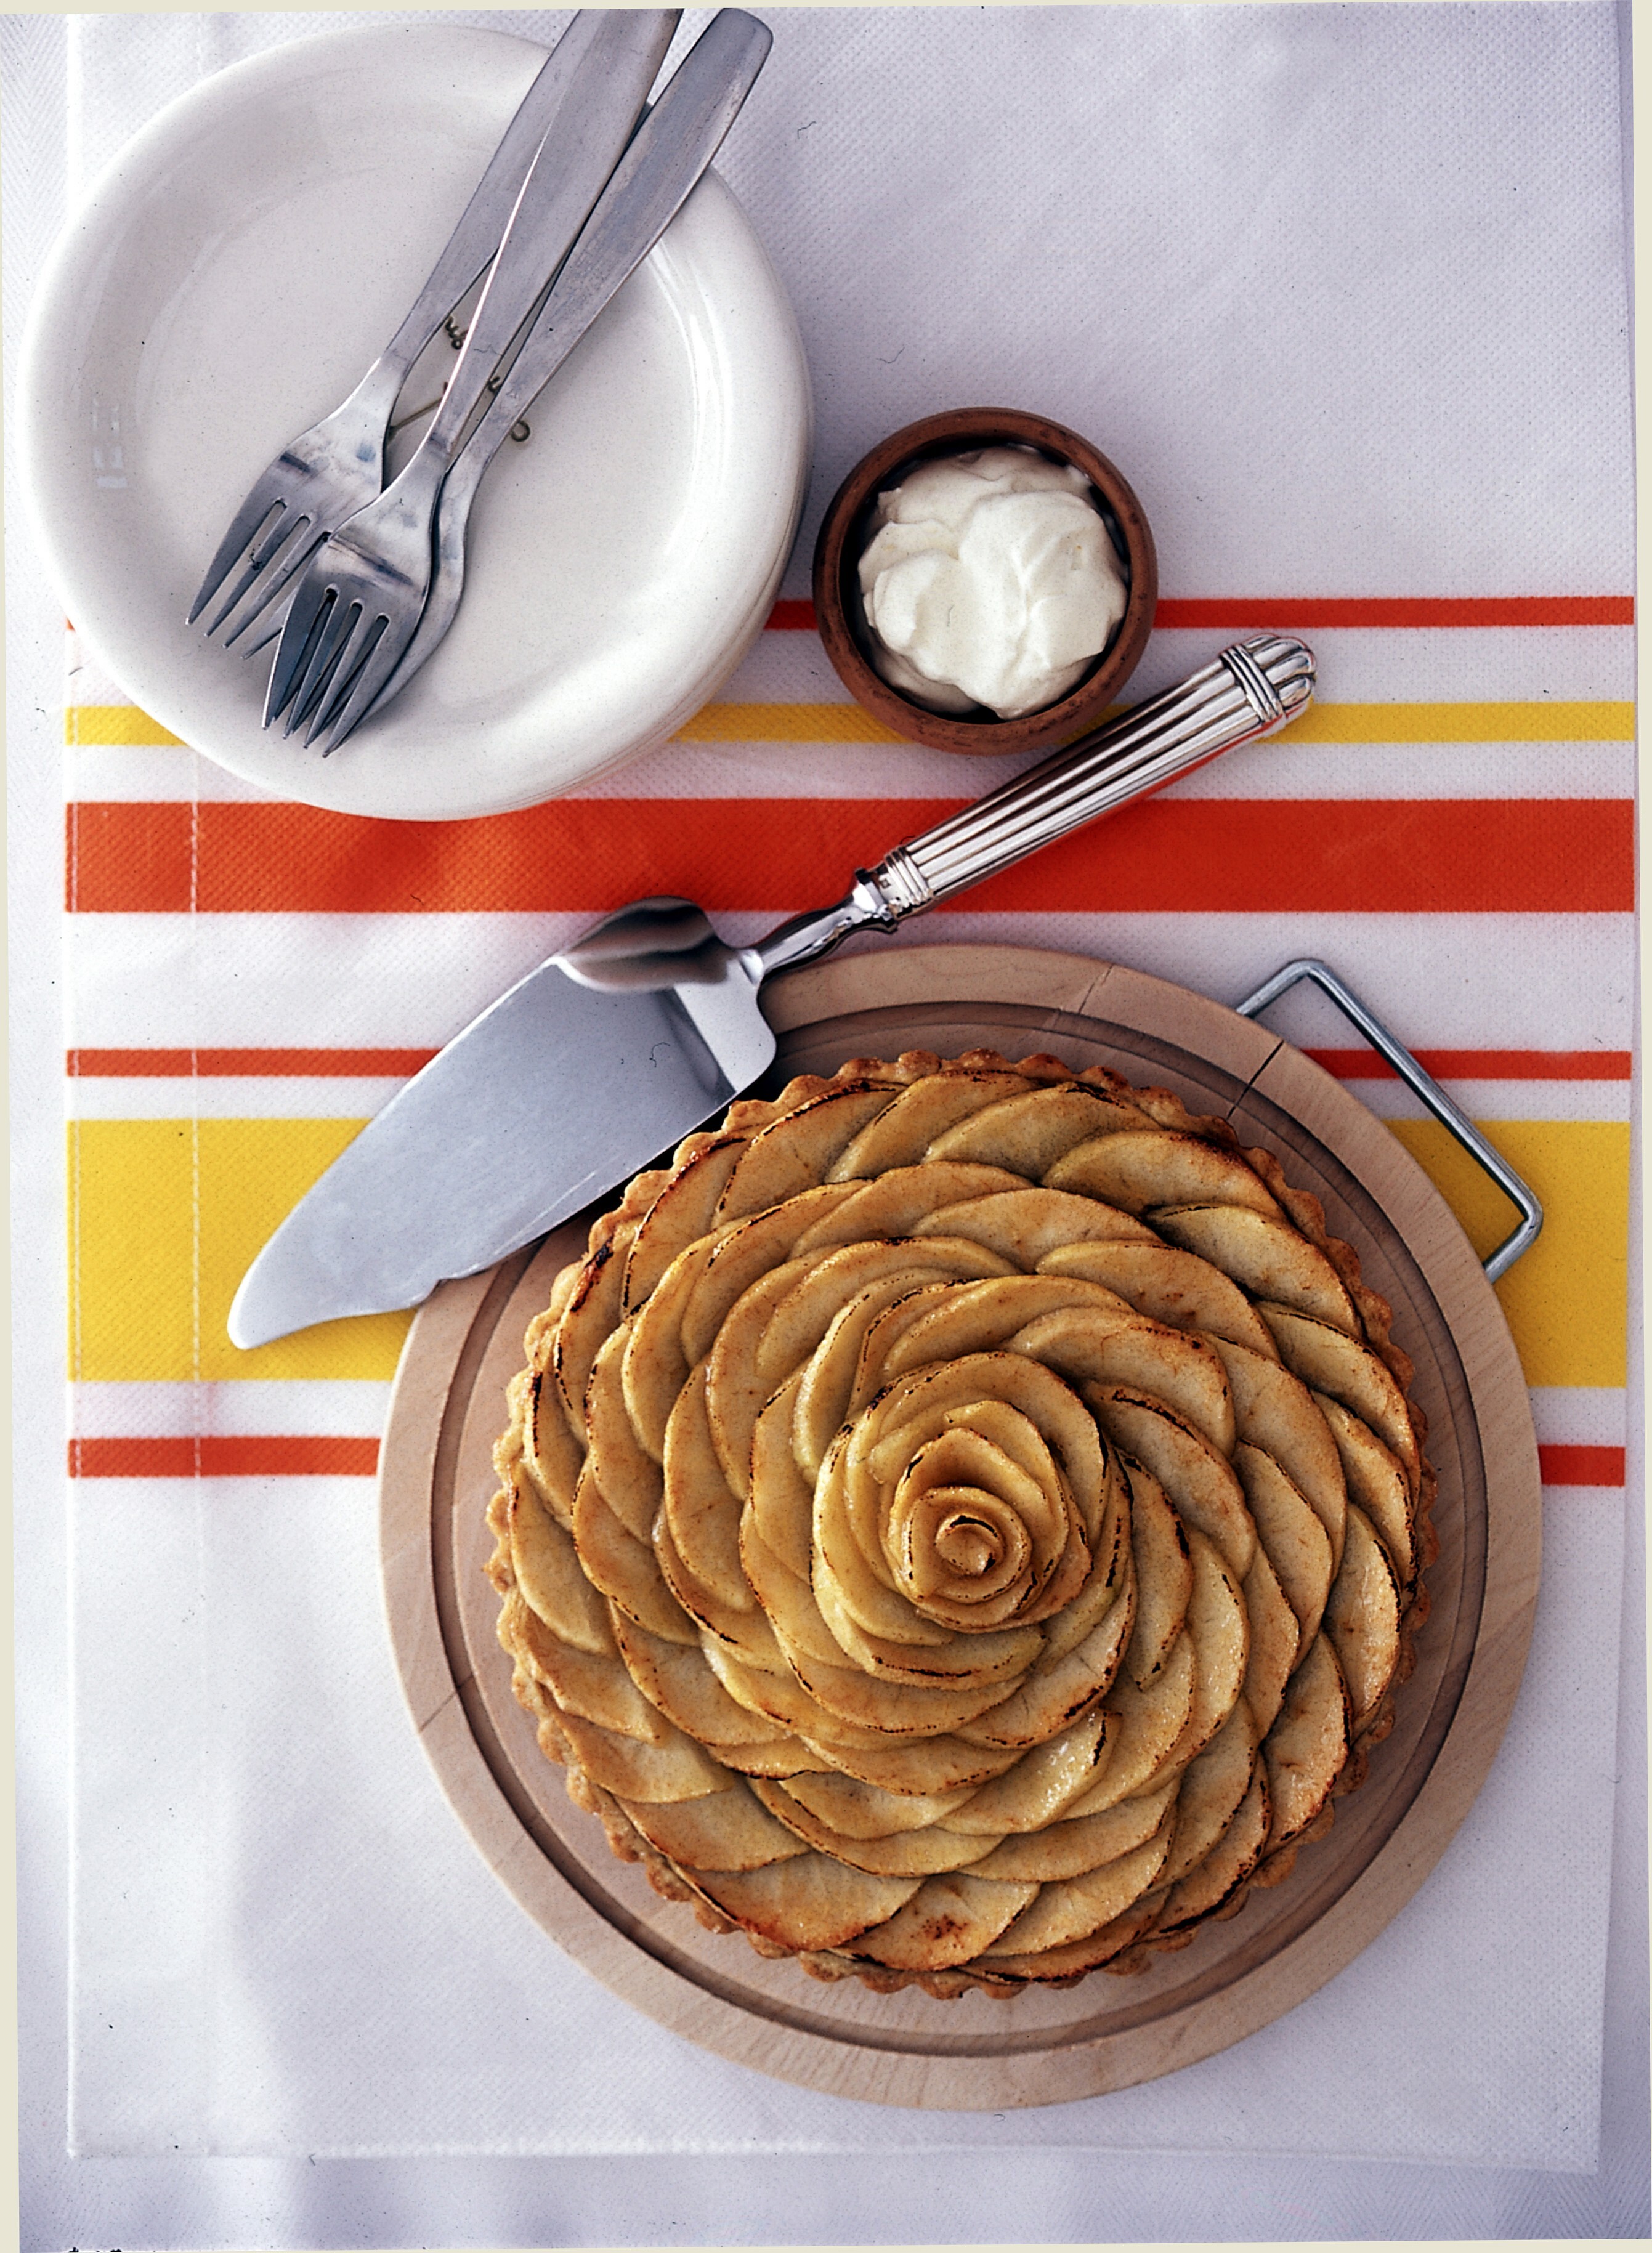 Susan Jung’s double apple tart. Photography: Koji Studios. Styling: Rachael Macchiesi